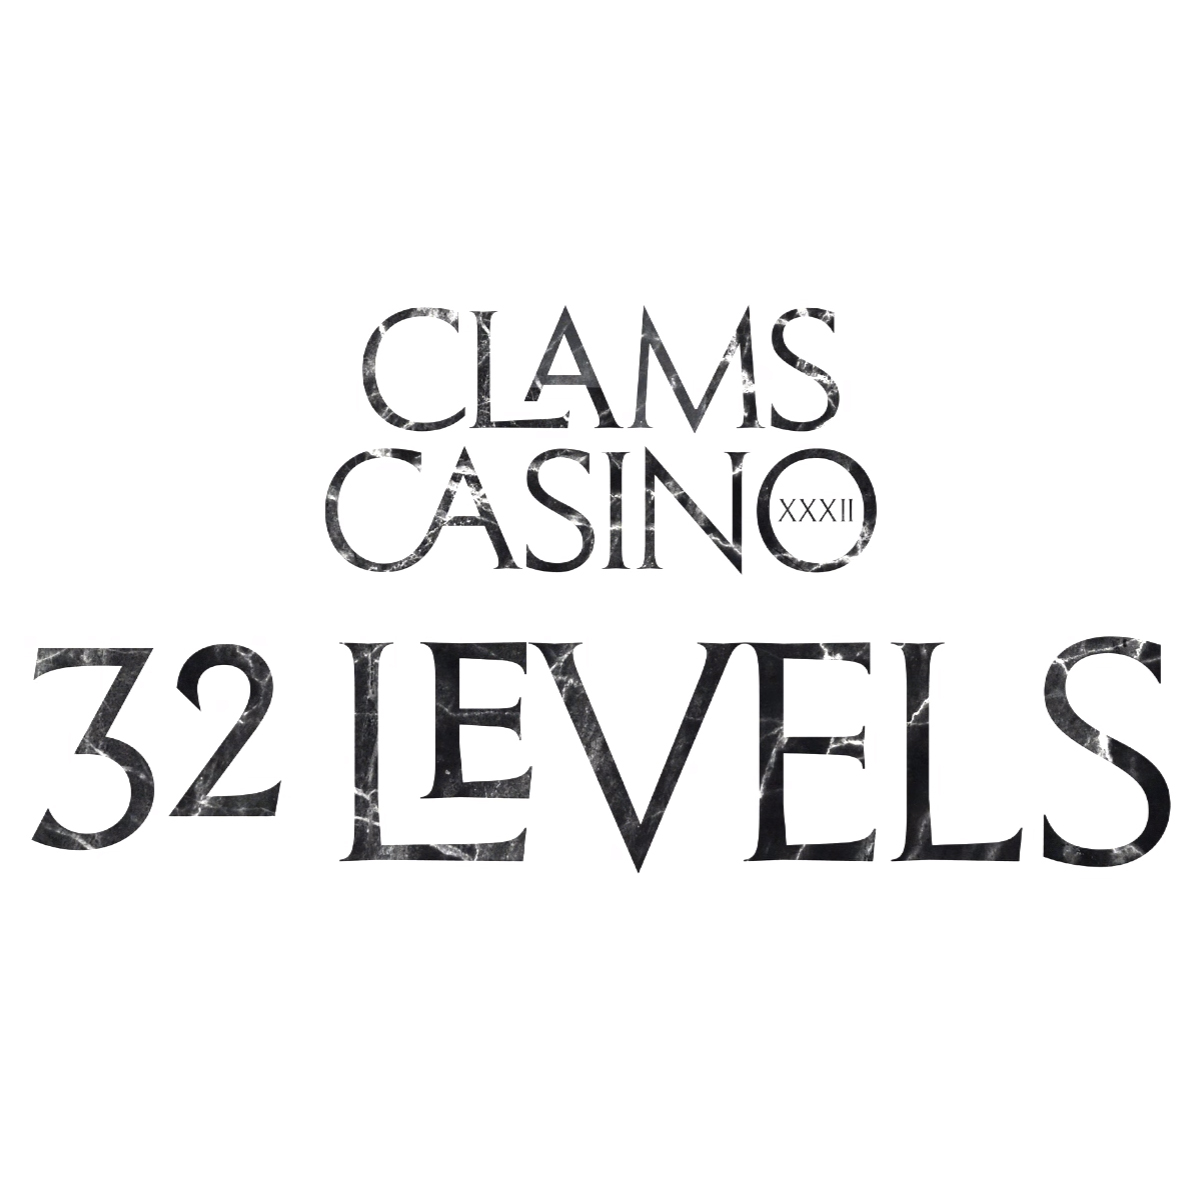 Clams Casino - "Blast" (Video)